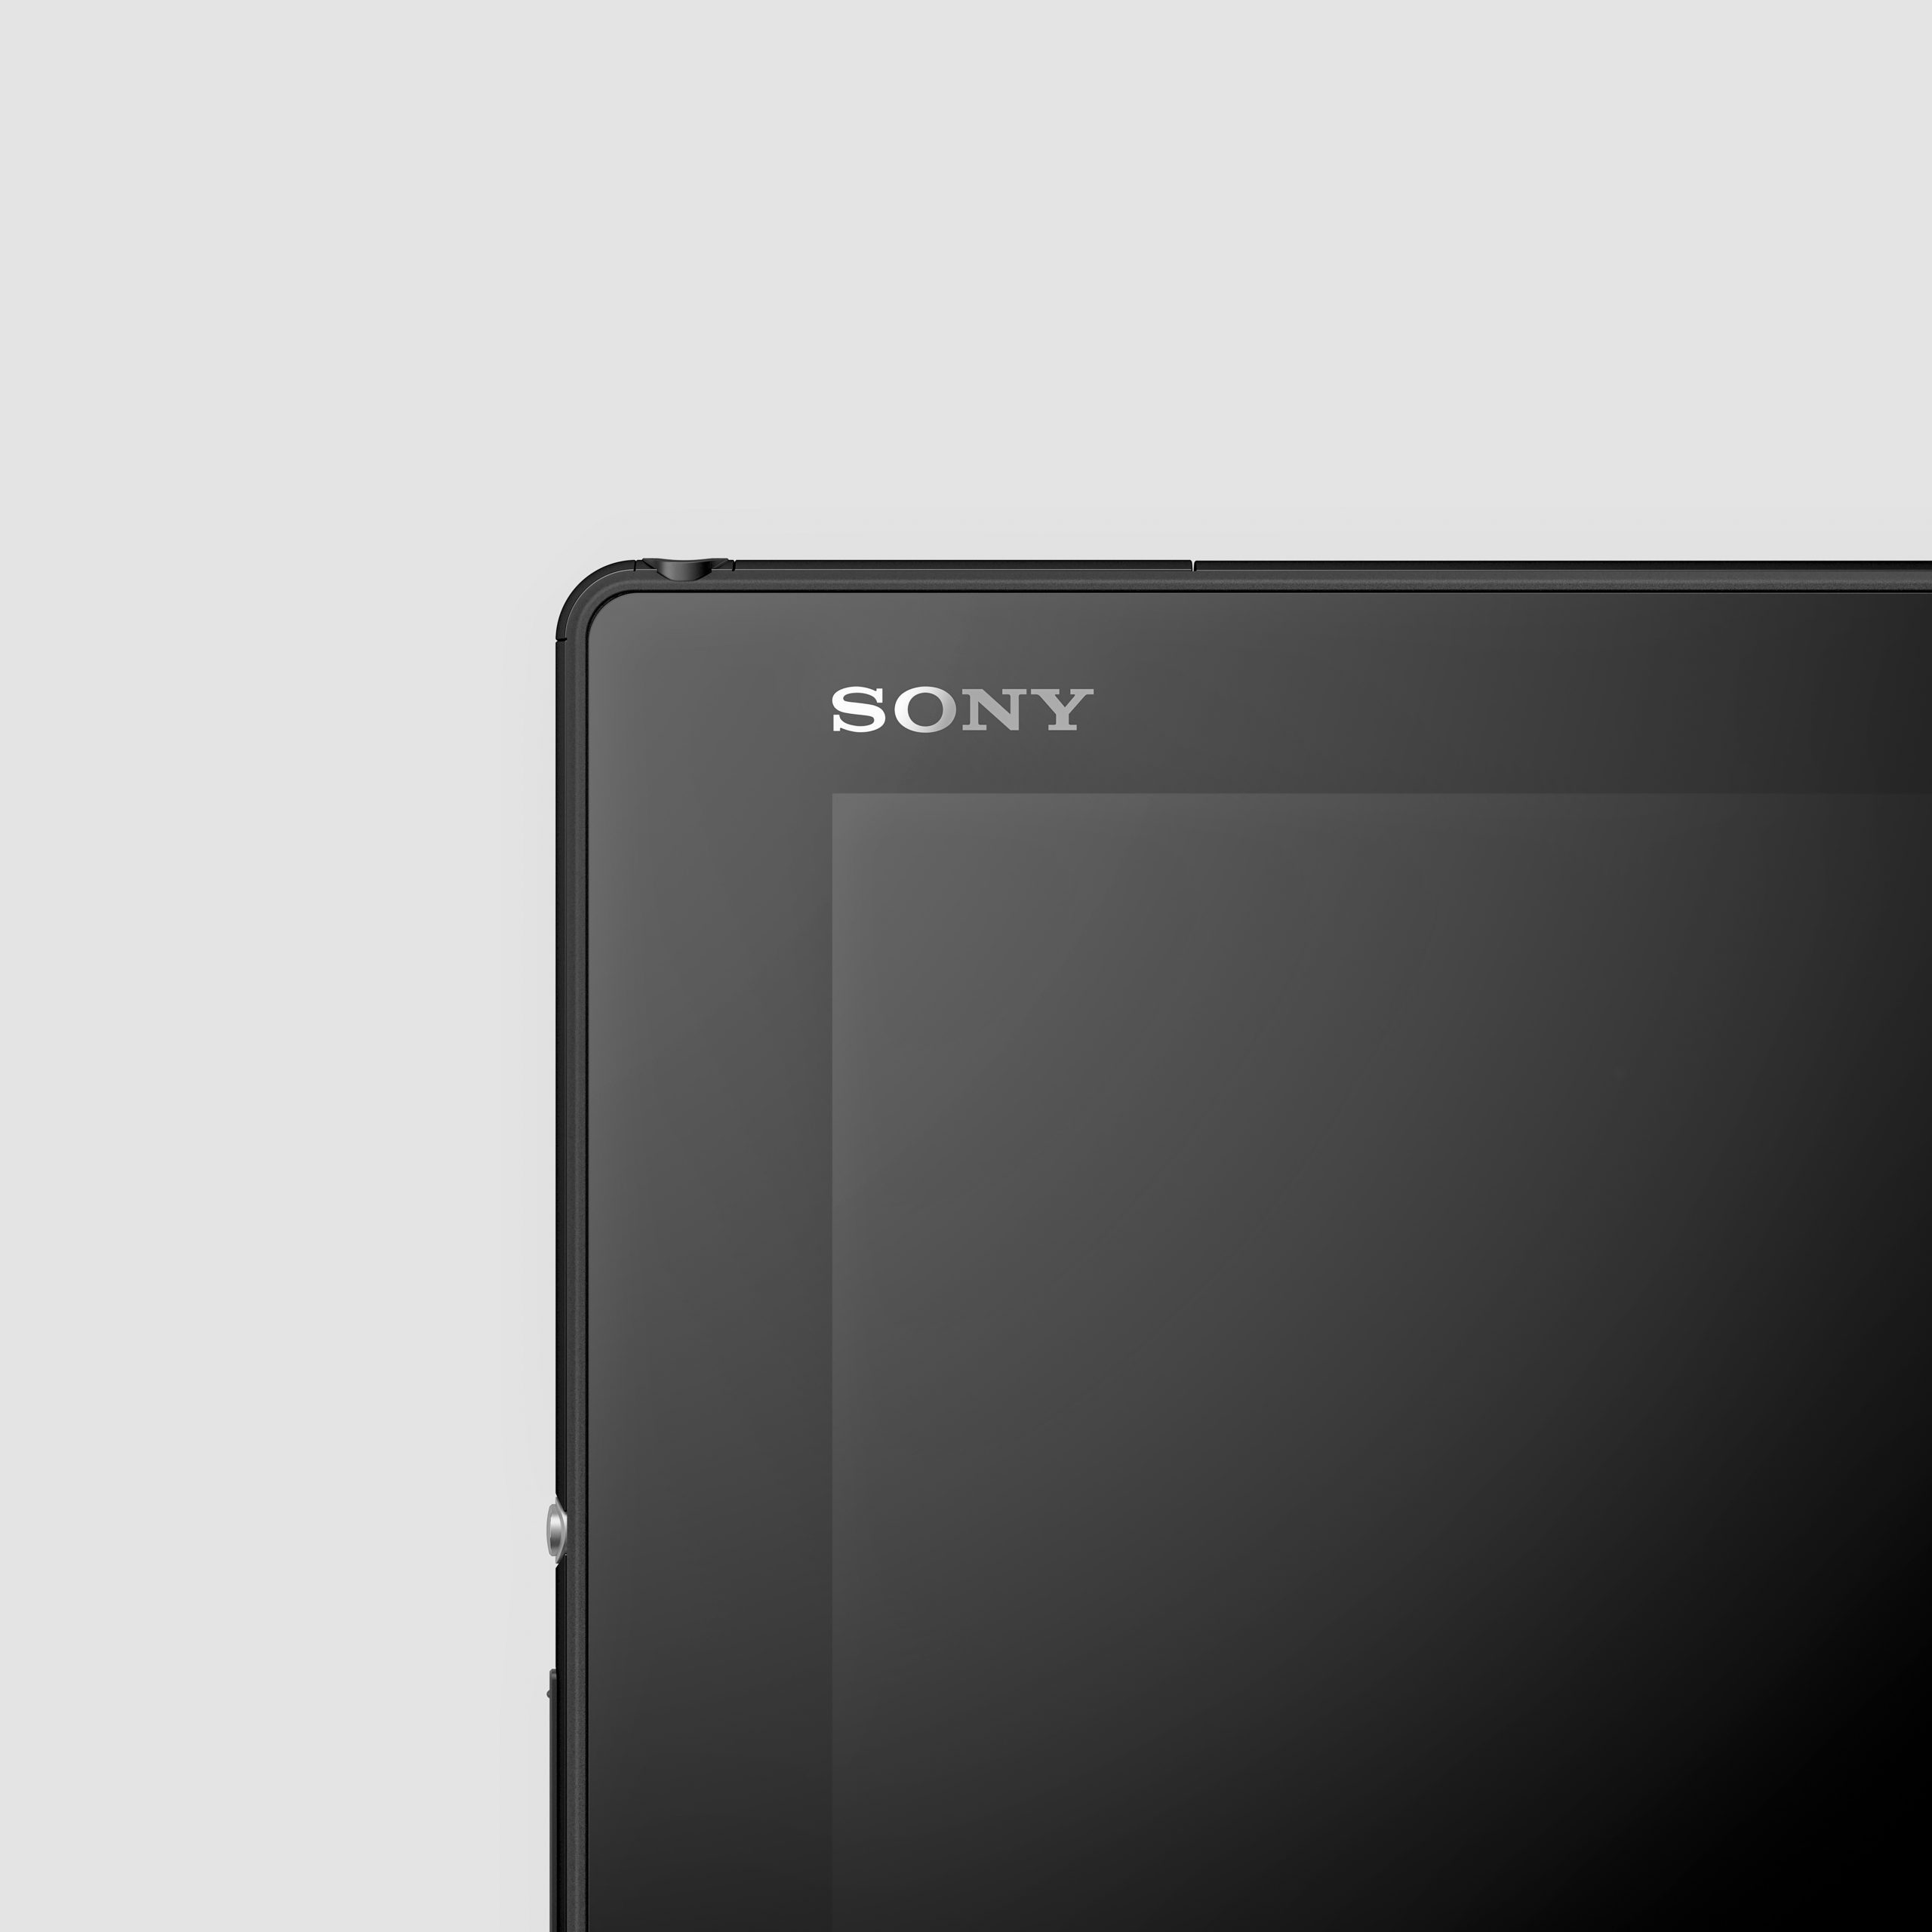 Sony Xperia Z4 Tablet test - stor anmeldelse